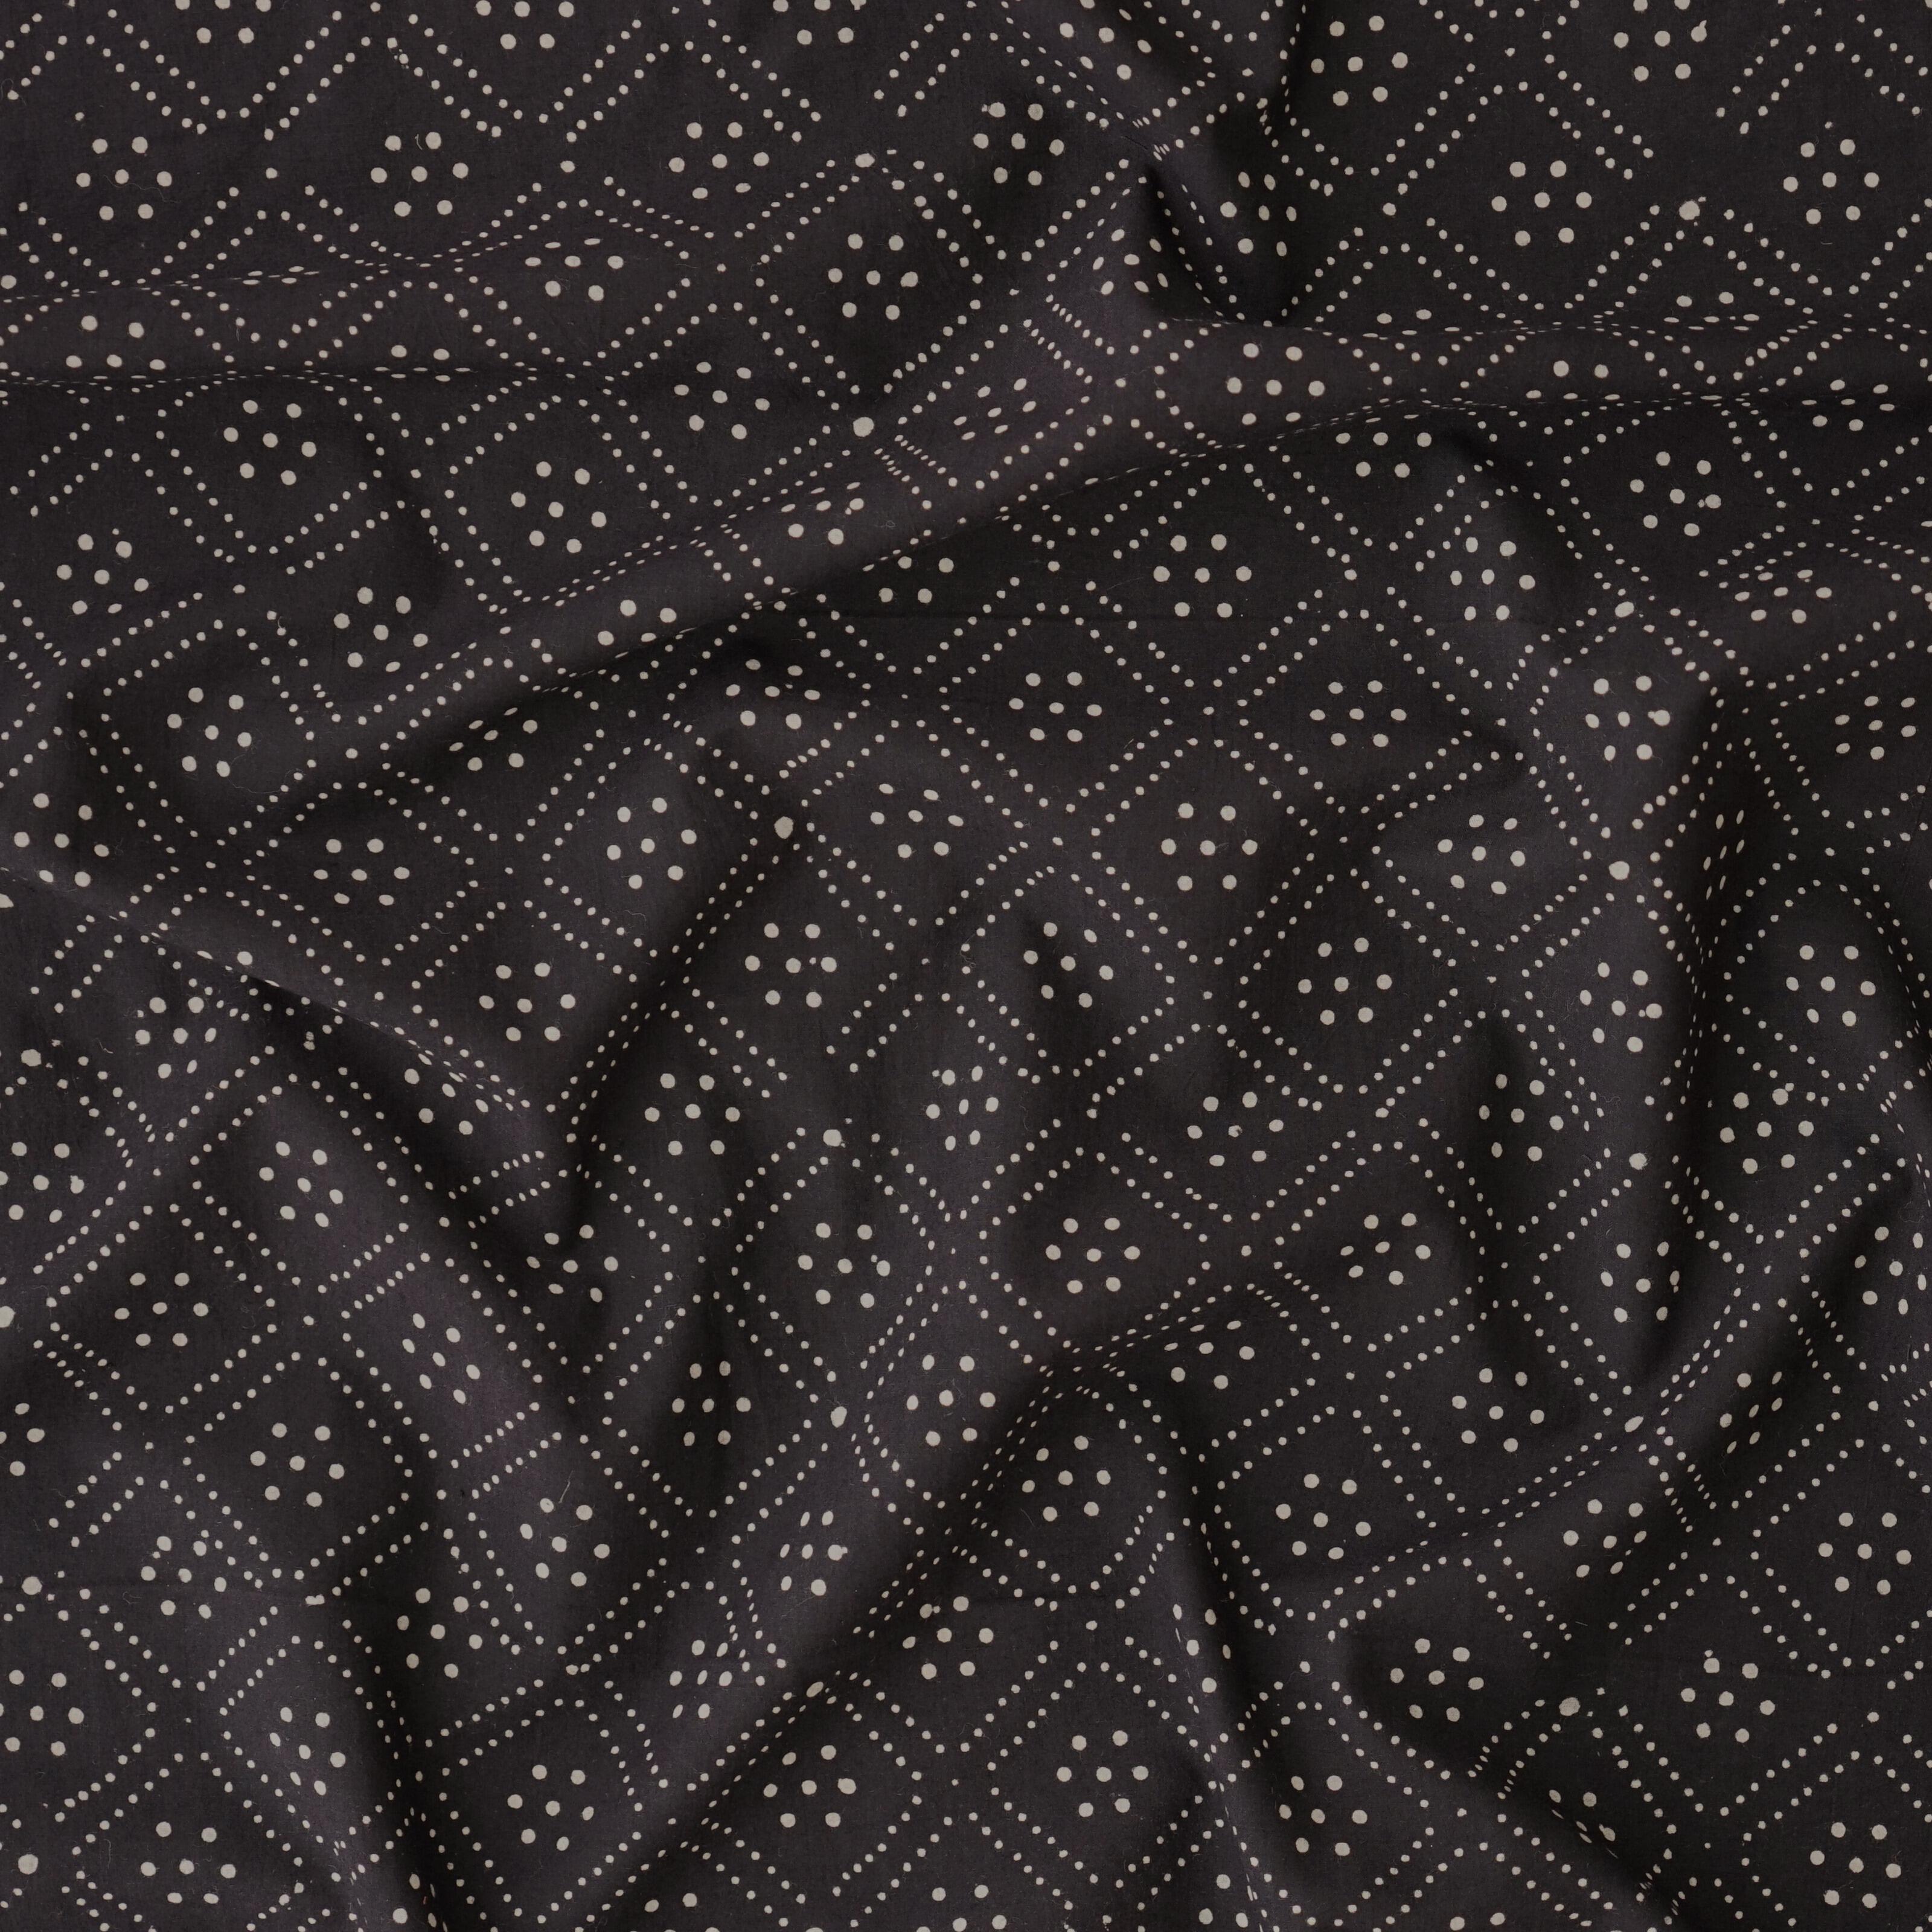 AHM24 - Block Printed Fabric, 100% Cotton, Ajrak Design / Black Diamond Dots. Contrast